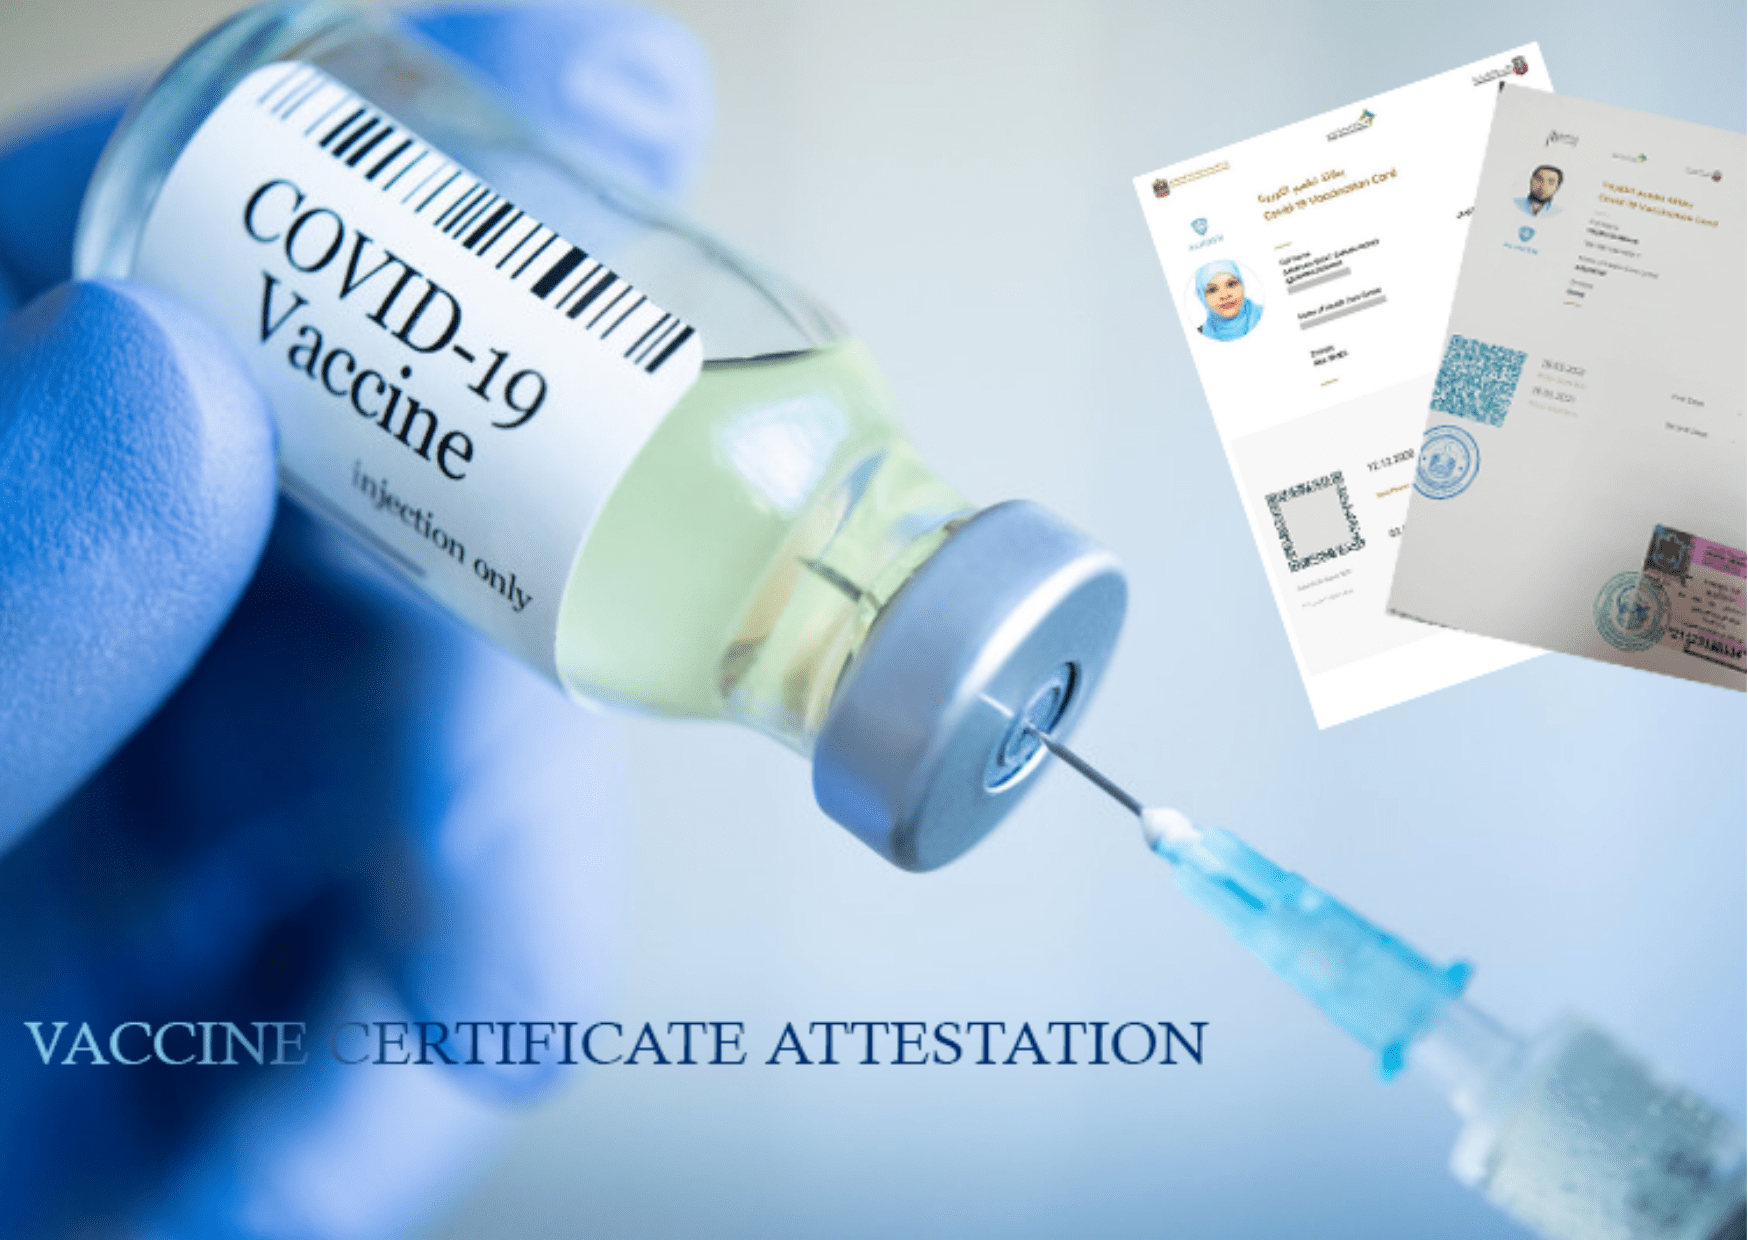 UAE's covid-19 vaccination certificate attestation